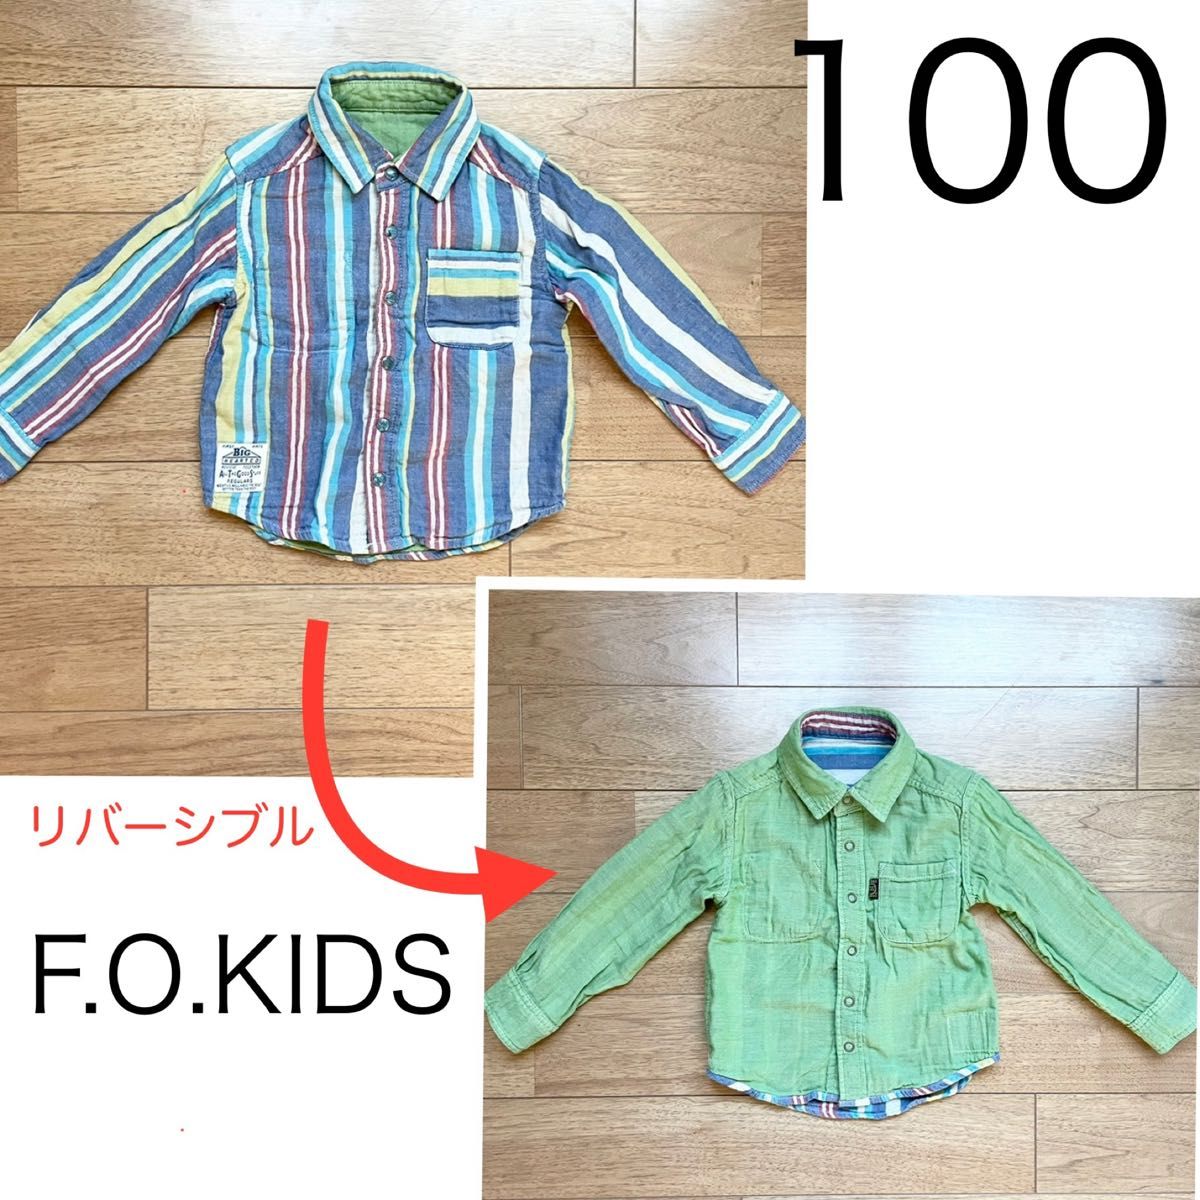 F.O.KIDS(エフオーキッズ) リバーシブル 長袖シャツ ストライプ 100cm